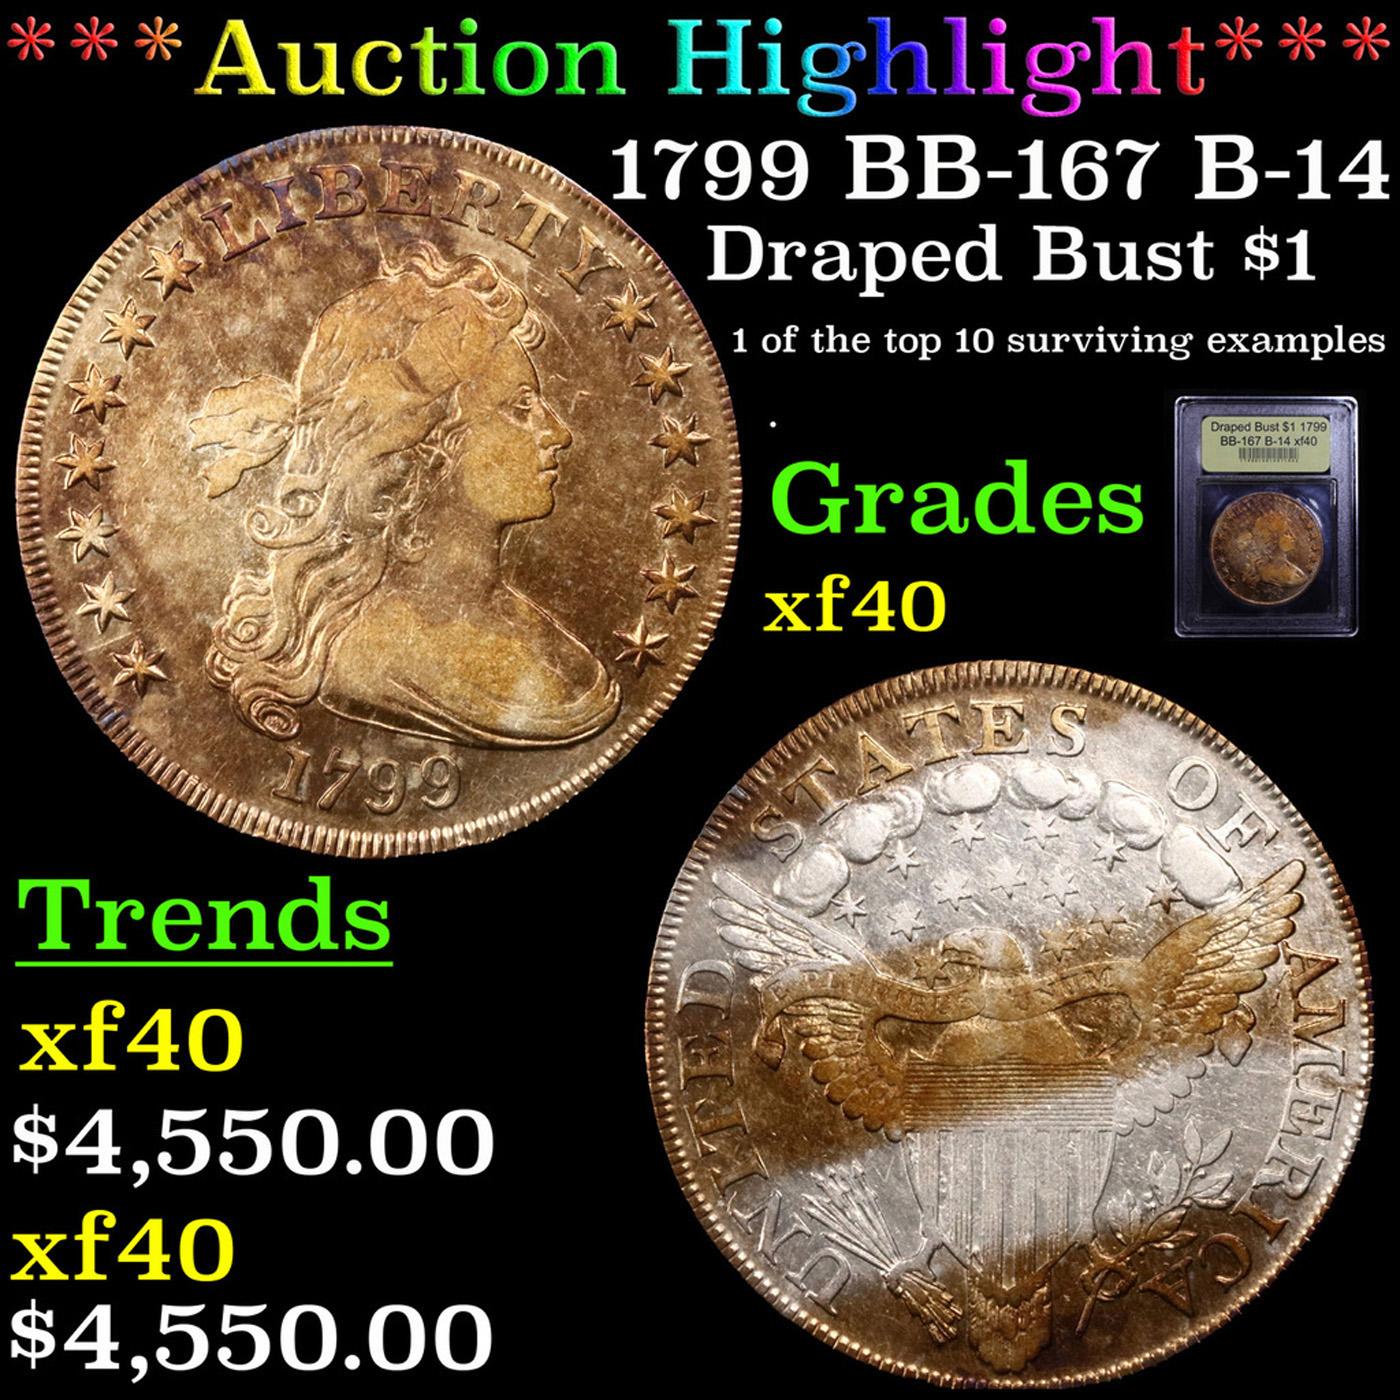 ***Auction Highlight*** 1799 BB-167 B-14 Draped Bust Dollar $1 Graded xf By USCG (fc)